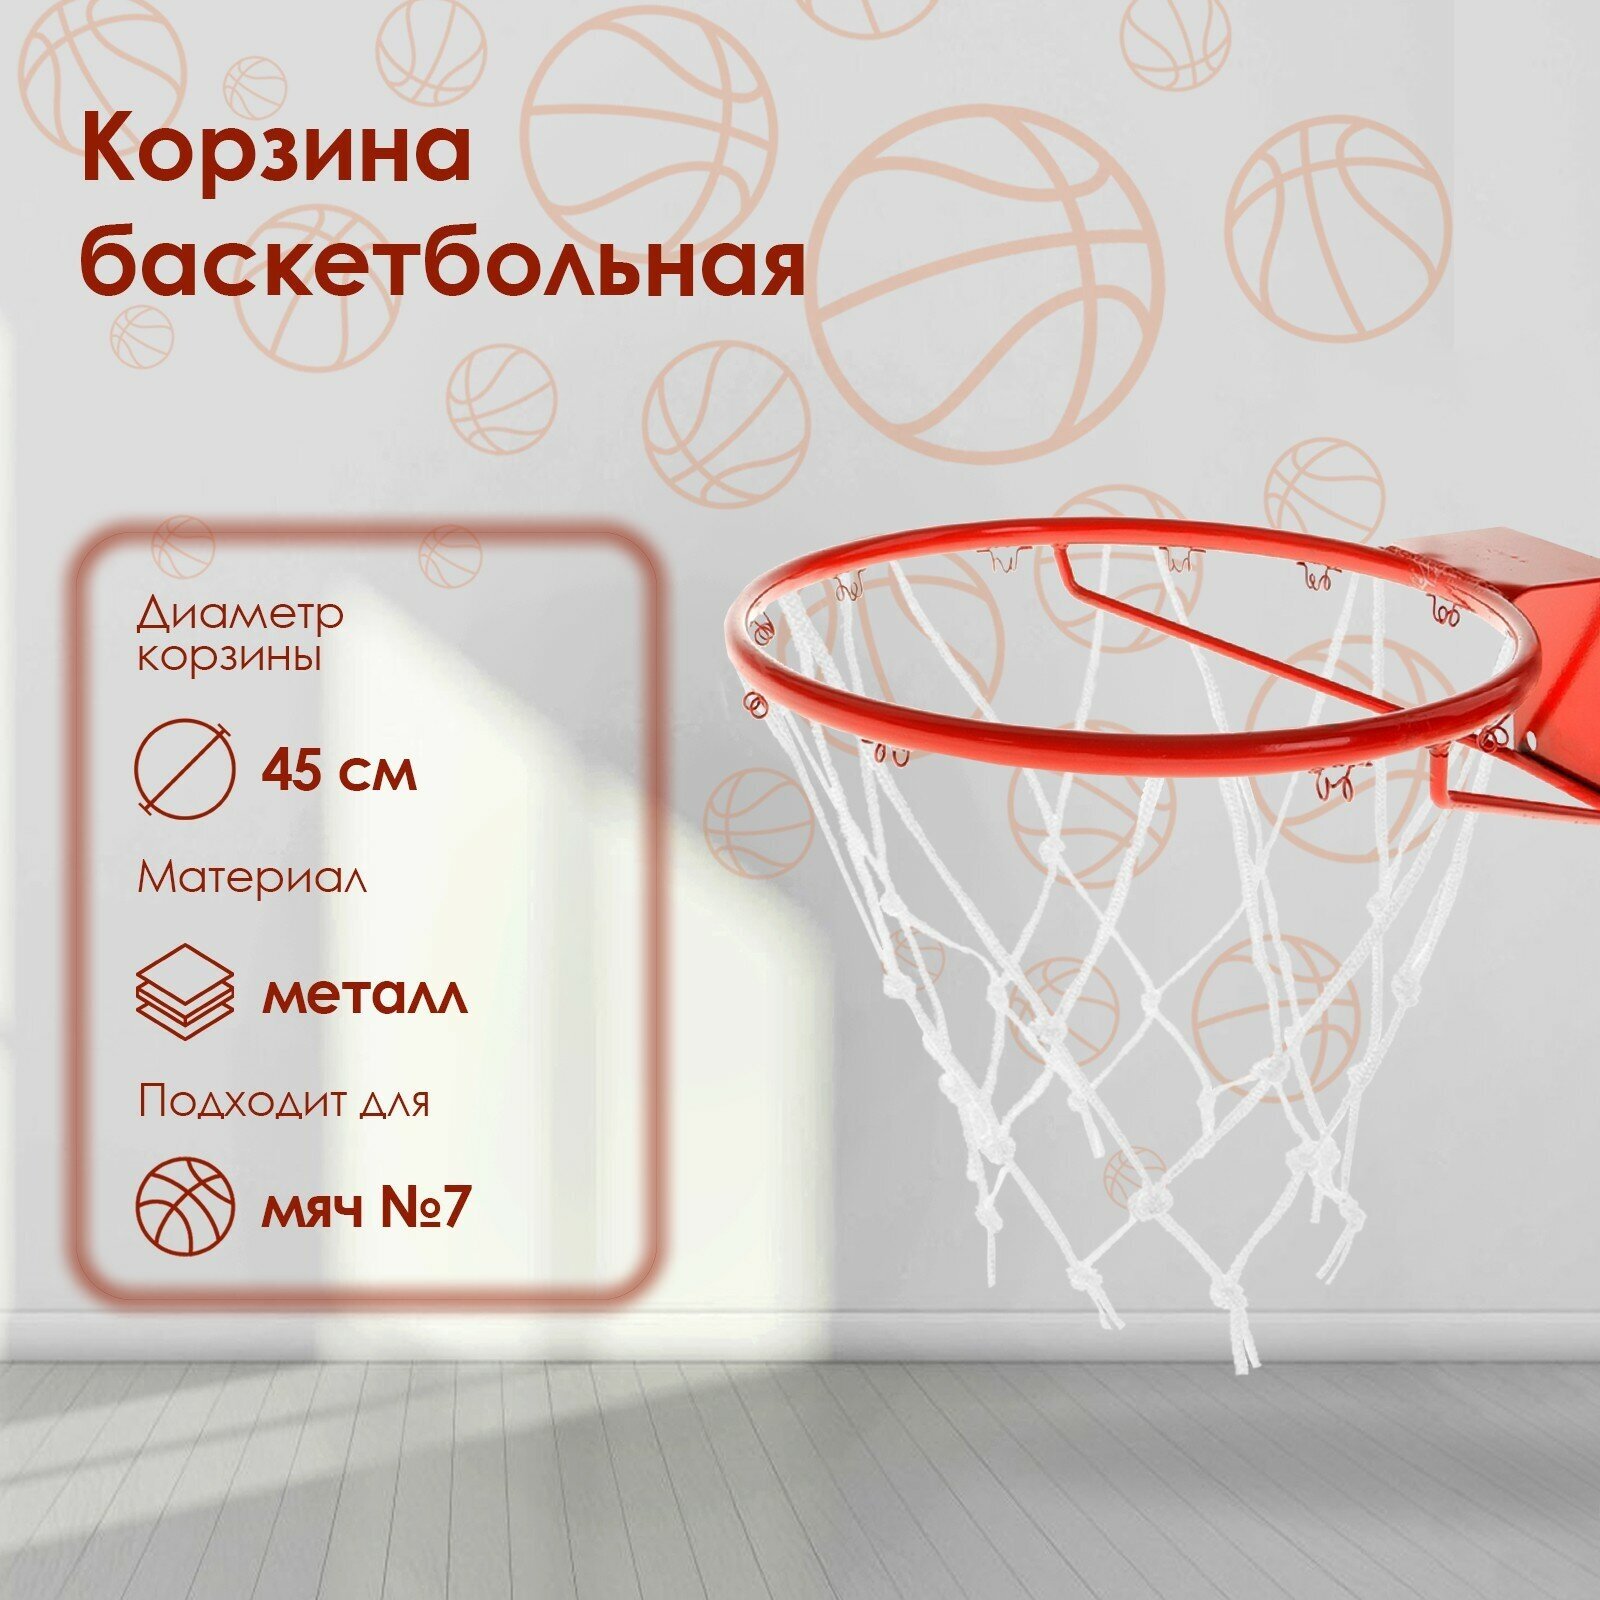 Корзина баскетбольная №7, диаметр 450 мм, стандартная, с сеткой